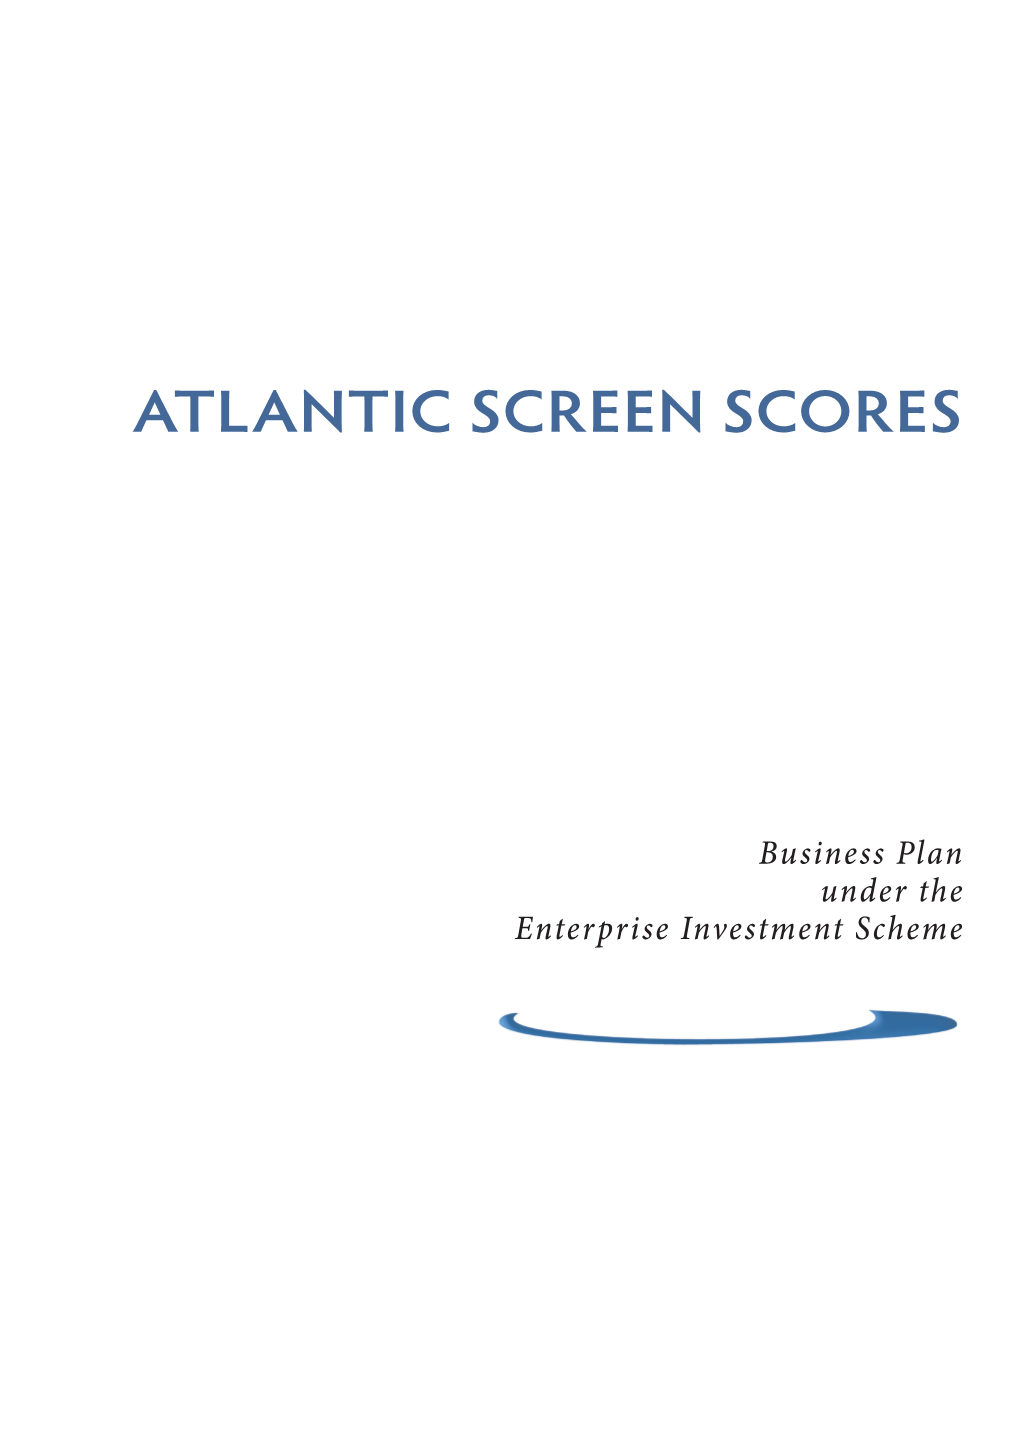 Atlantic Screen Scores